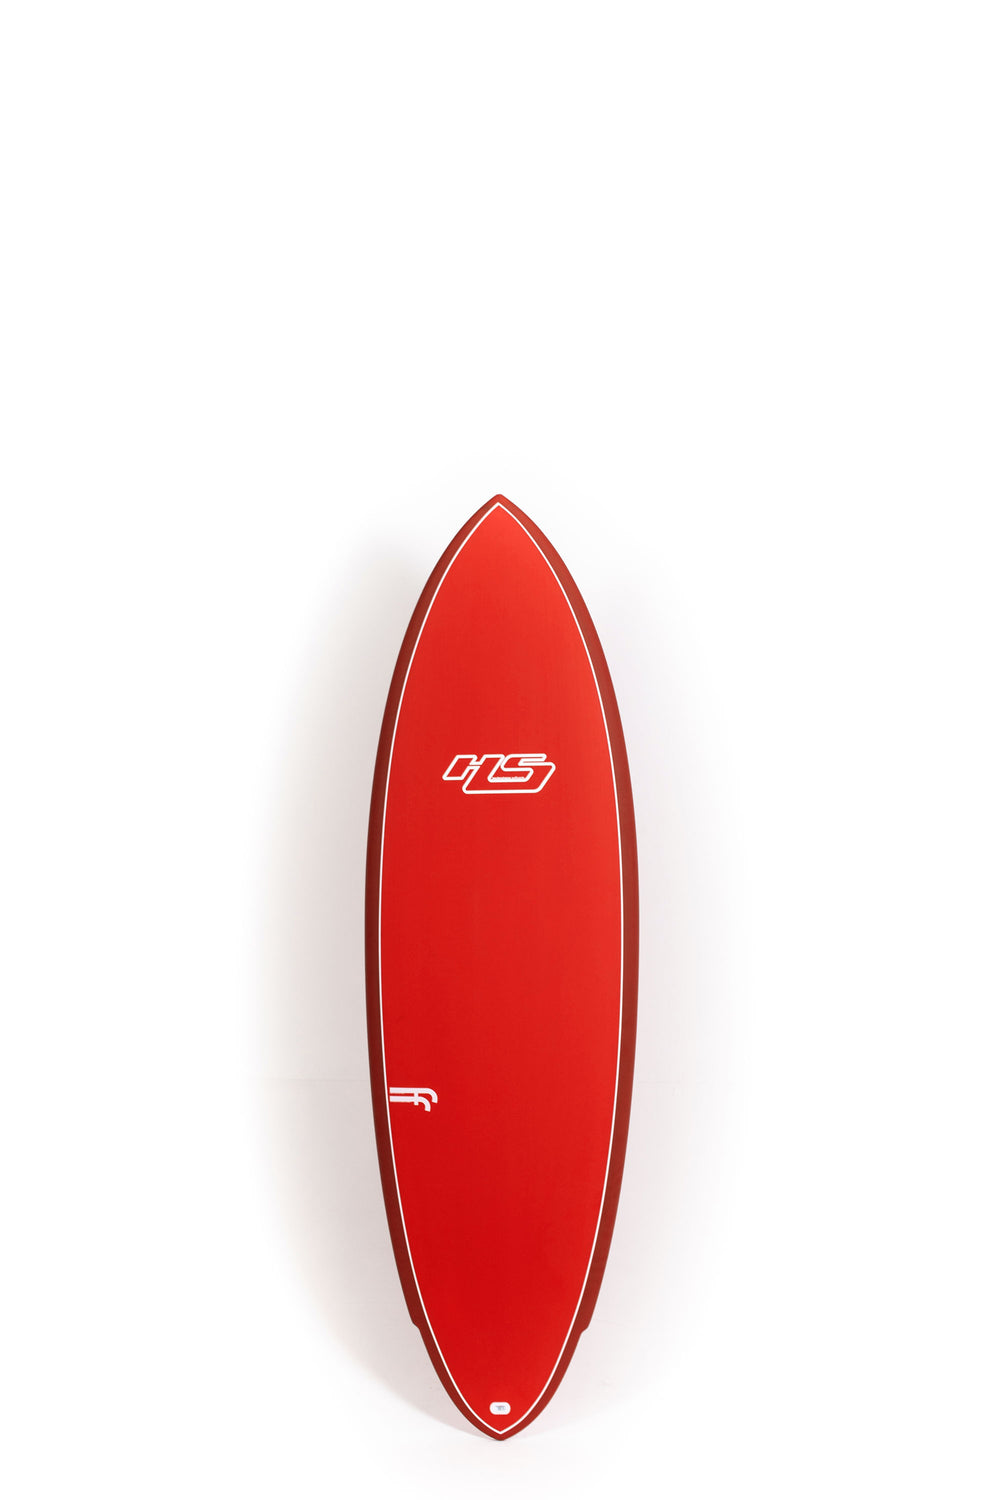 Pukas Surf Shop - HaydenShapes Surfboard - HYPTO KRYPTO TWIN PIN - 5'9